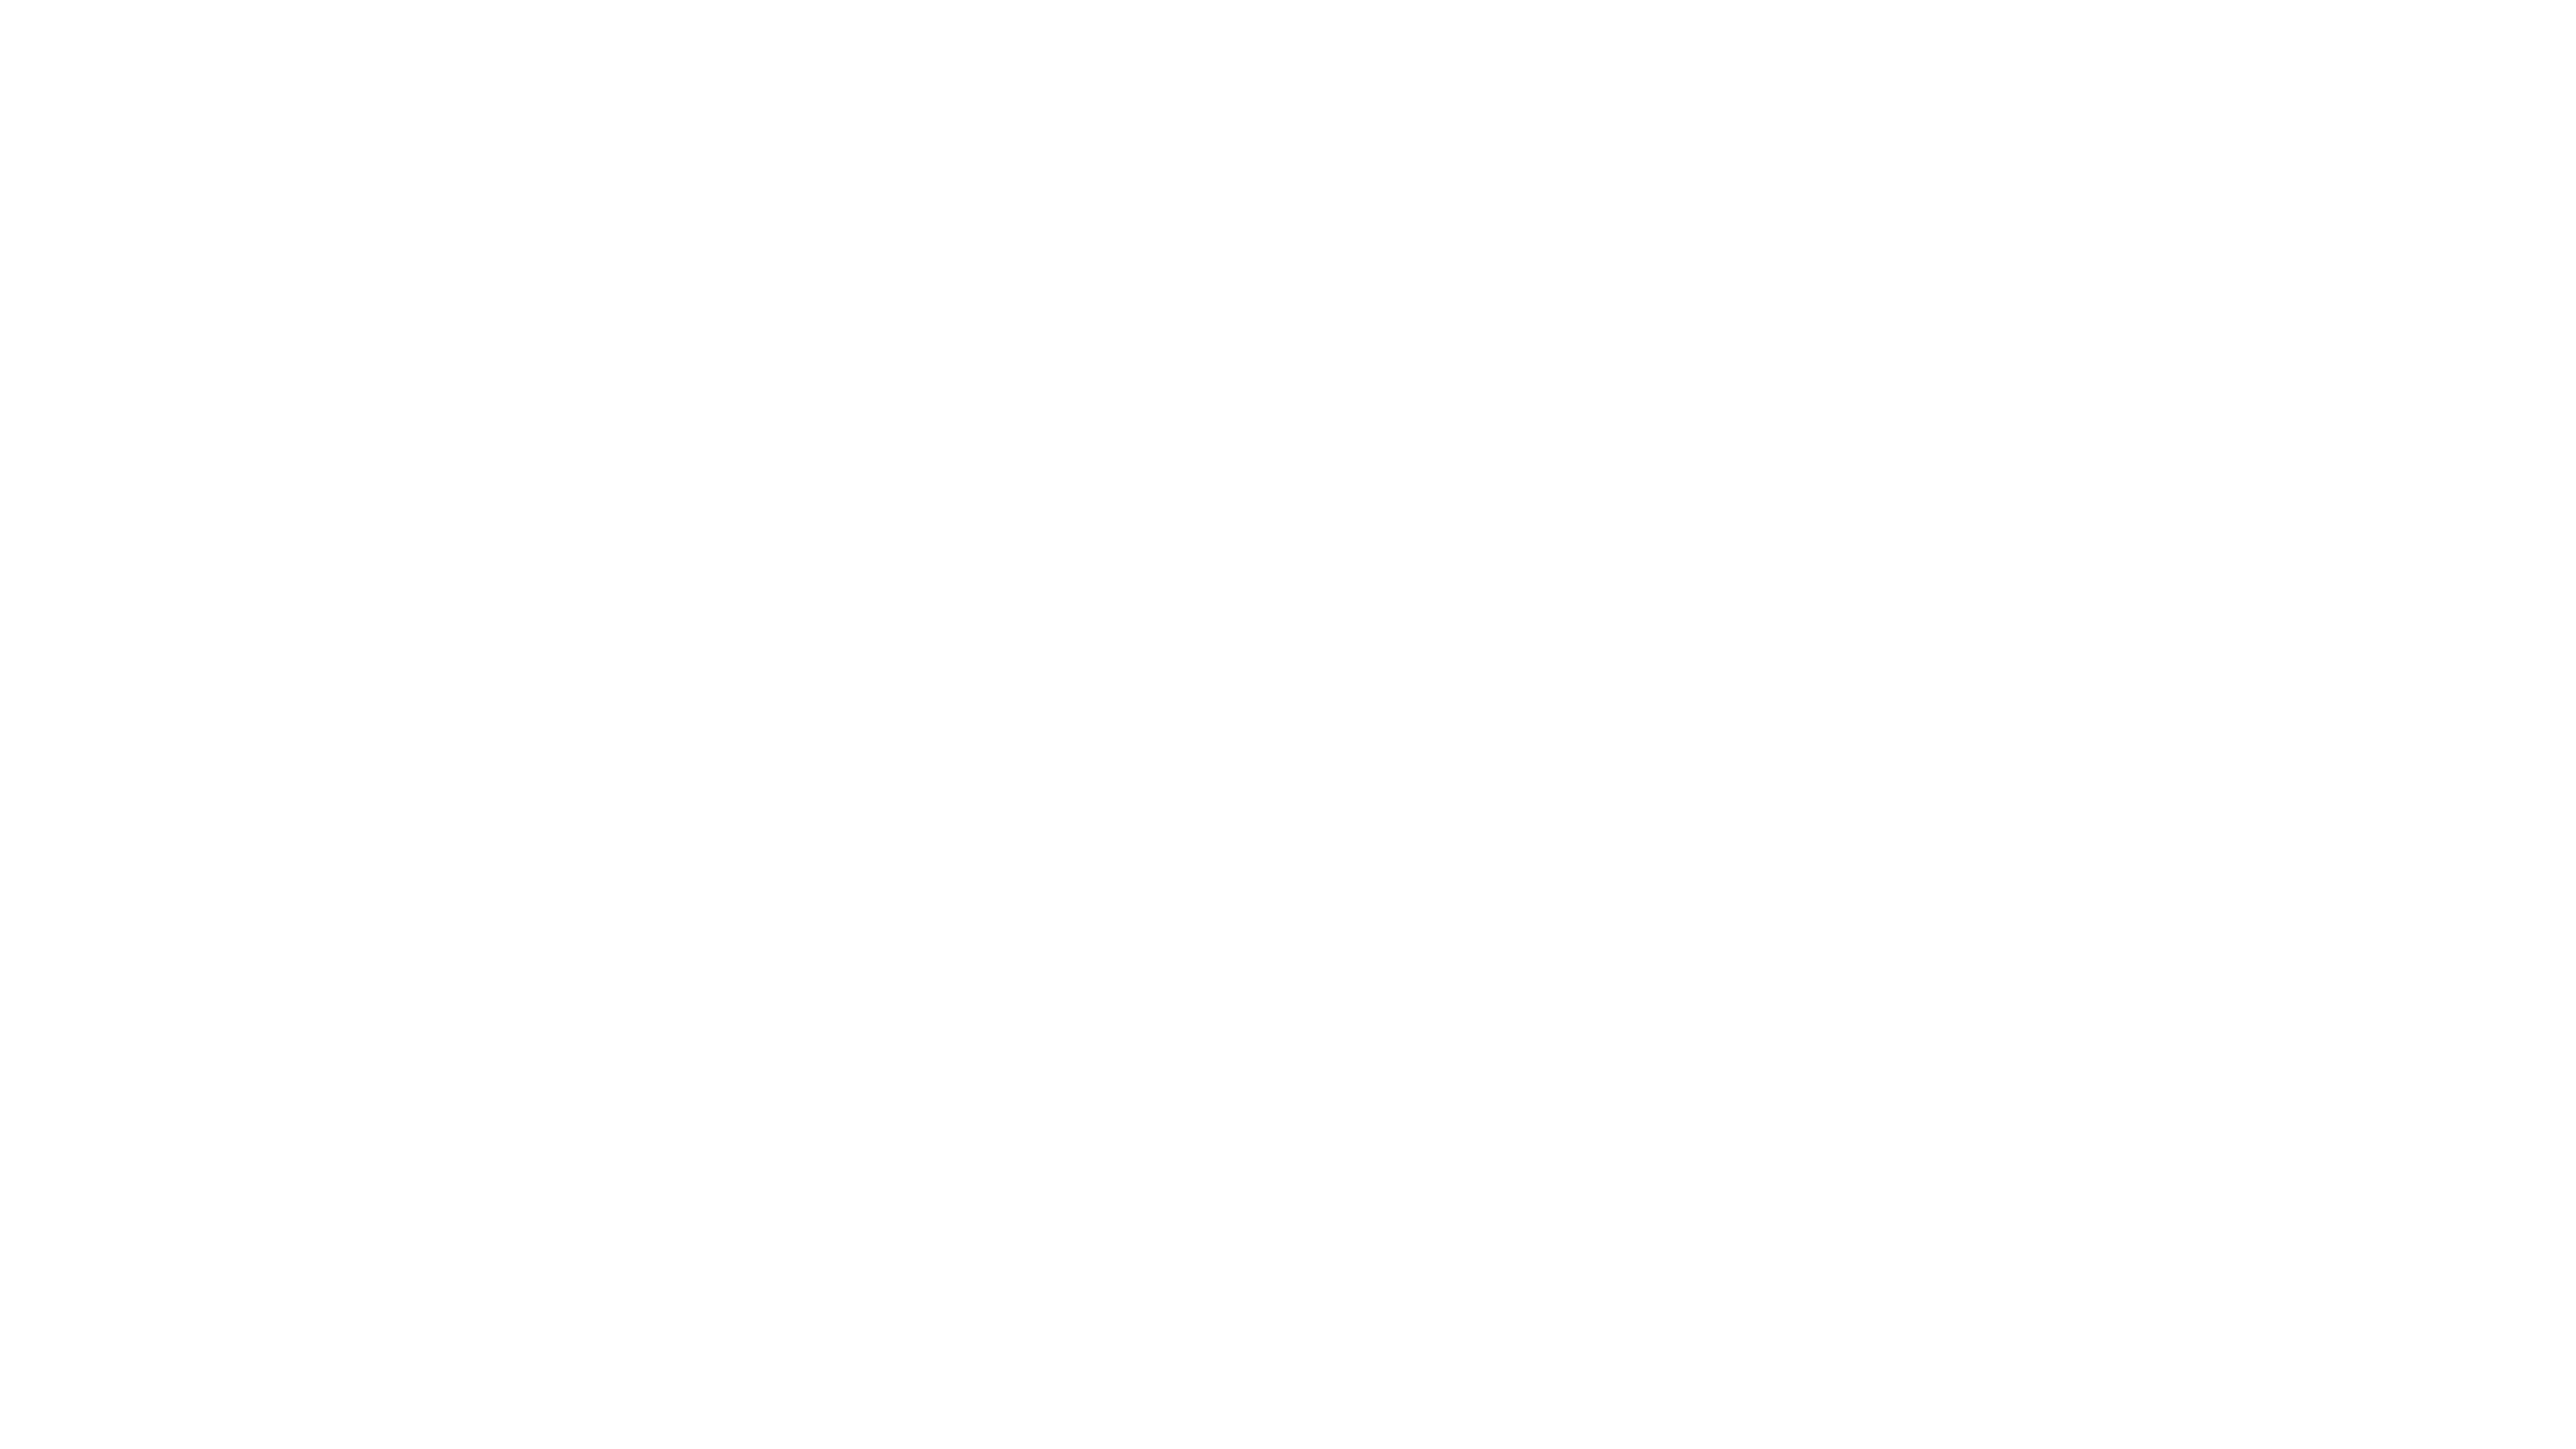 Agitator Single Malt Whisky logo